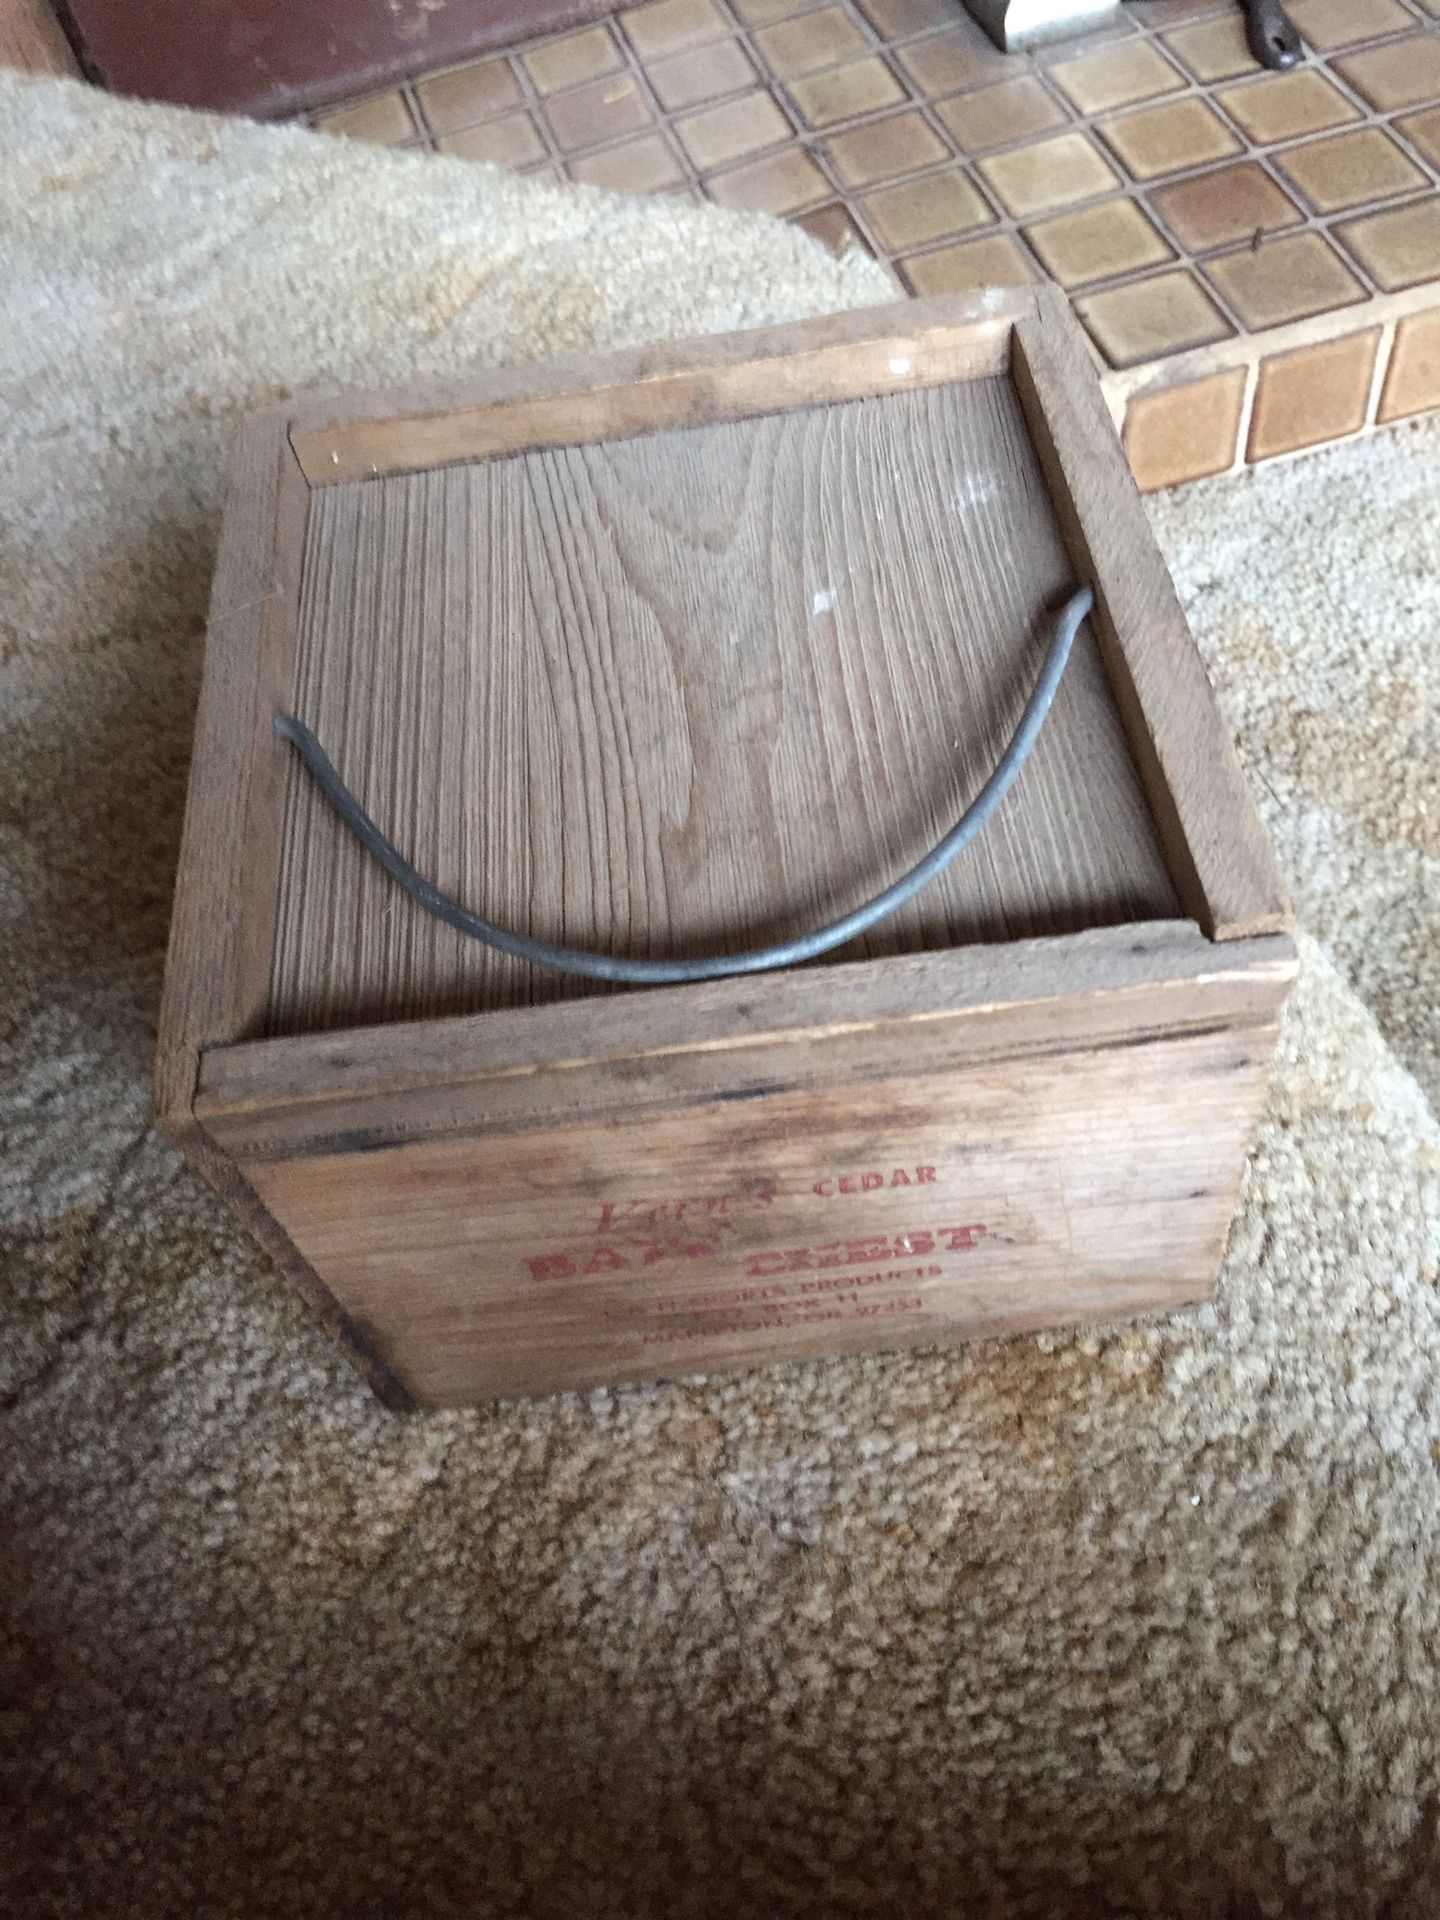 Vintage Cedar Bait Box